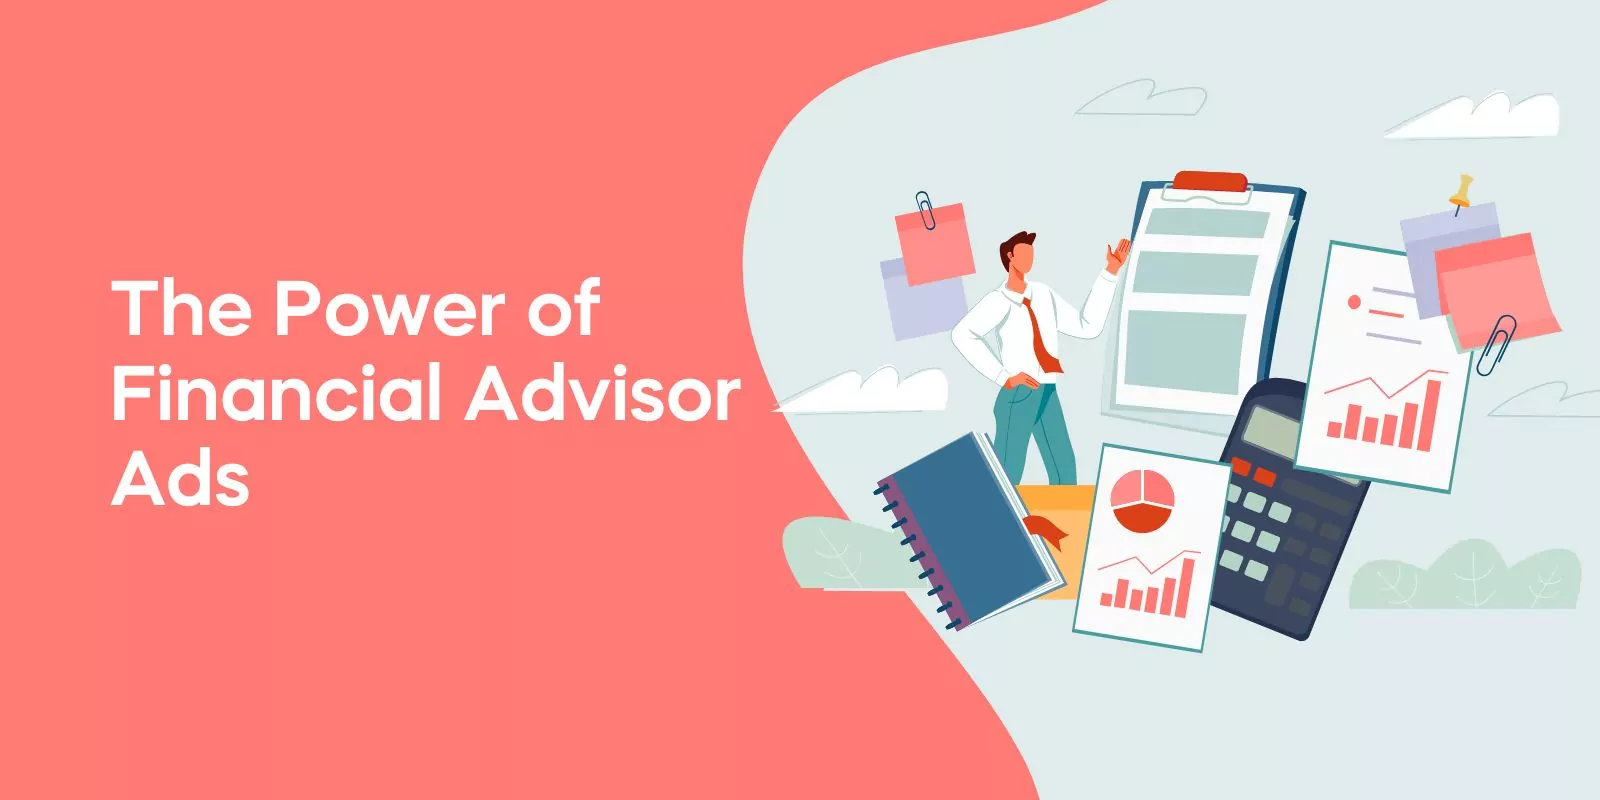 The Power of Financial Advisor Ads